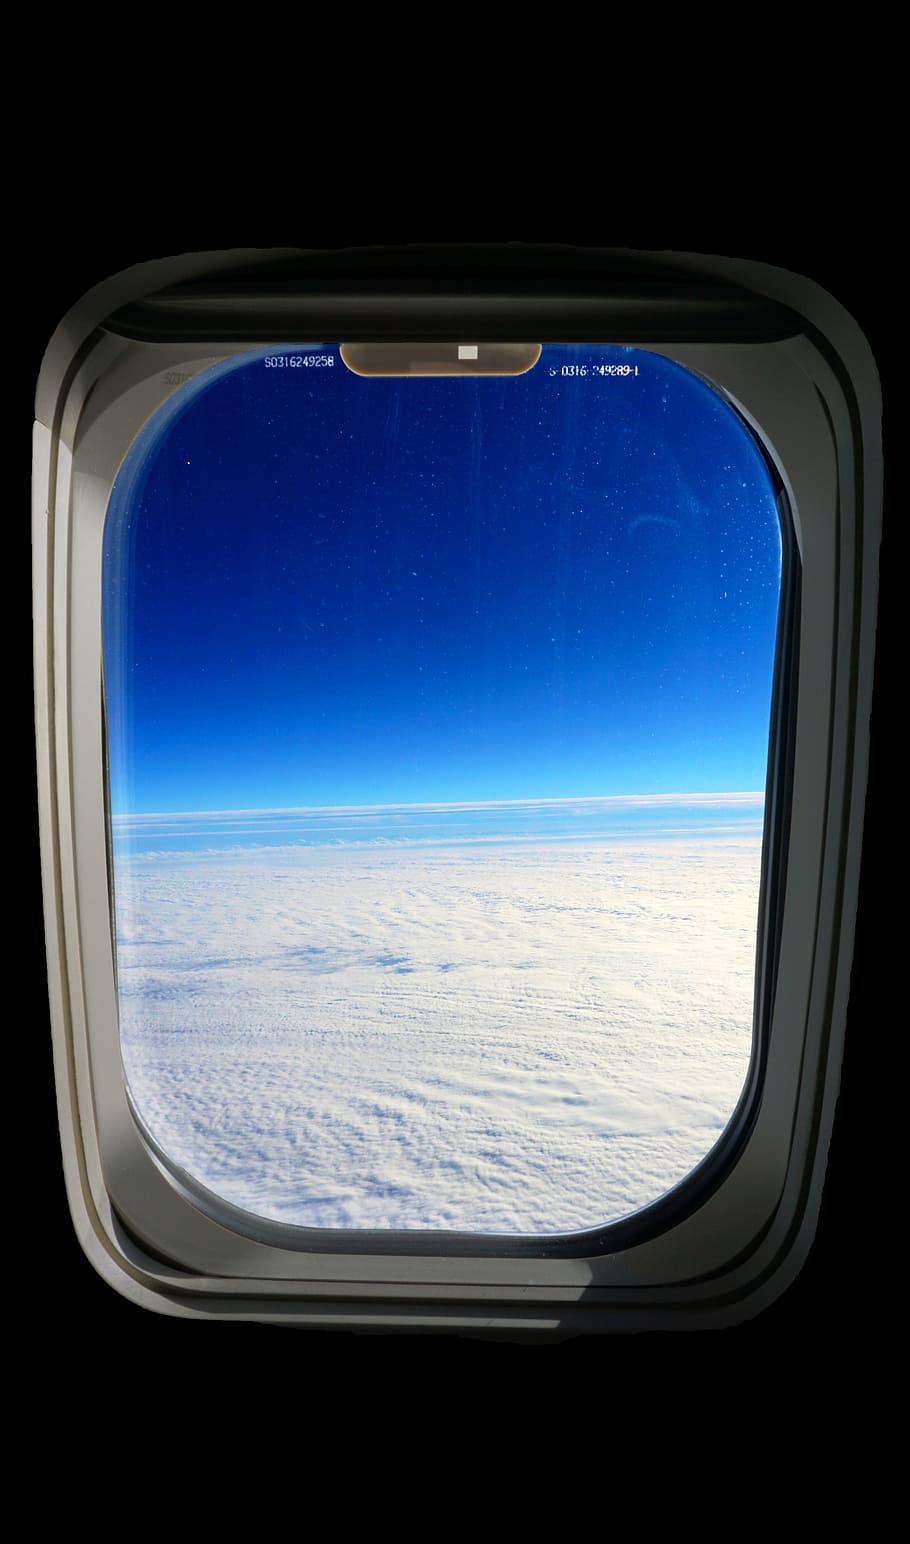 Langit, Jendela, Pesawat, jendela pesawat, jendela langit, ruang, langit siang, bola dunia, awan, interior kendaraan